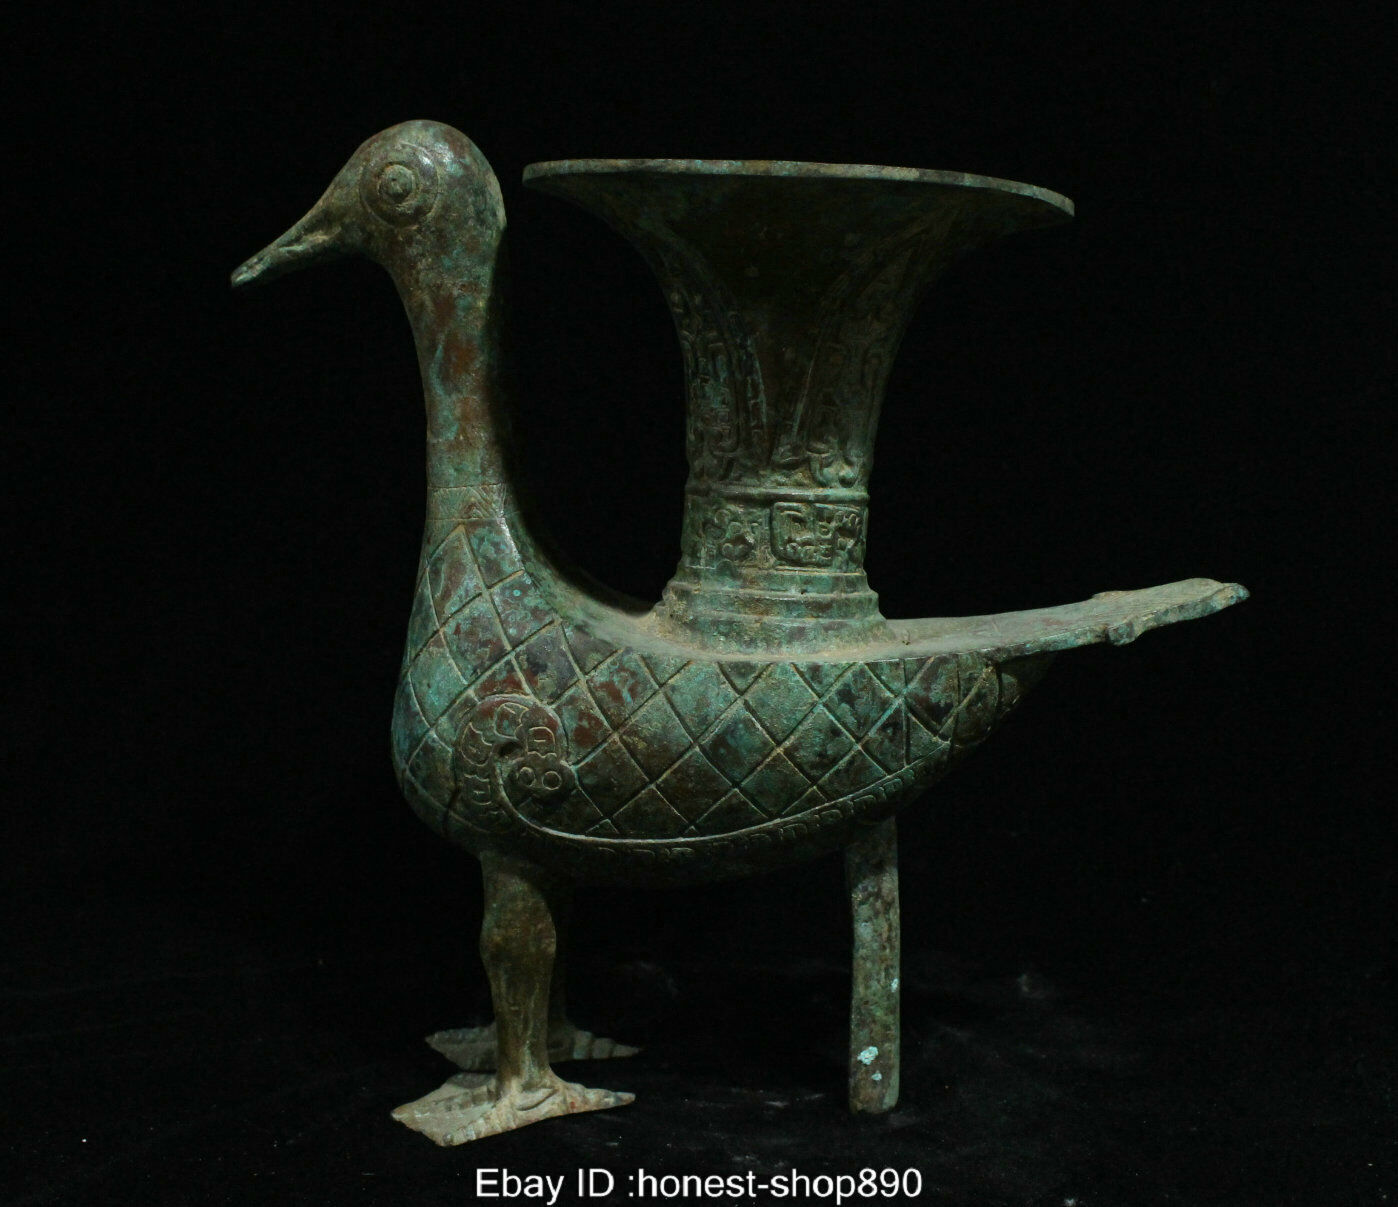 Antique Old Chinese Bronze Ware Dynasty Bird Beast Bottle Vase Statue Sculpture